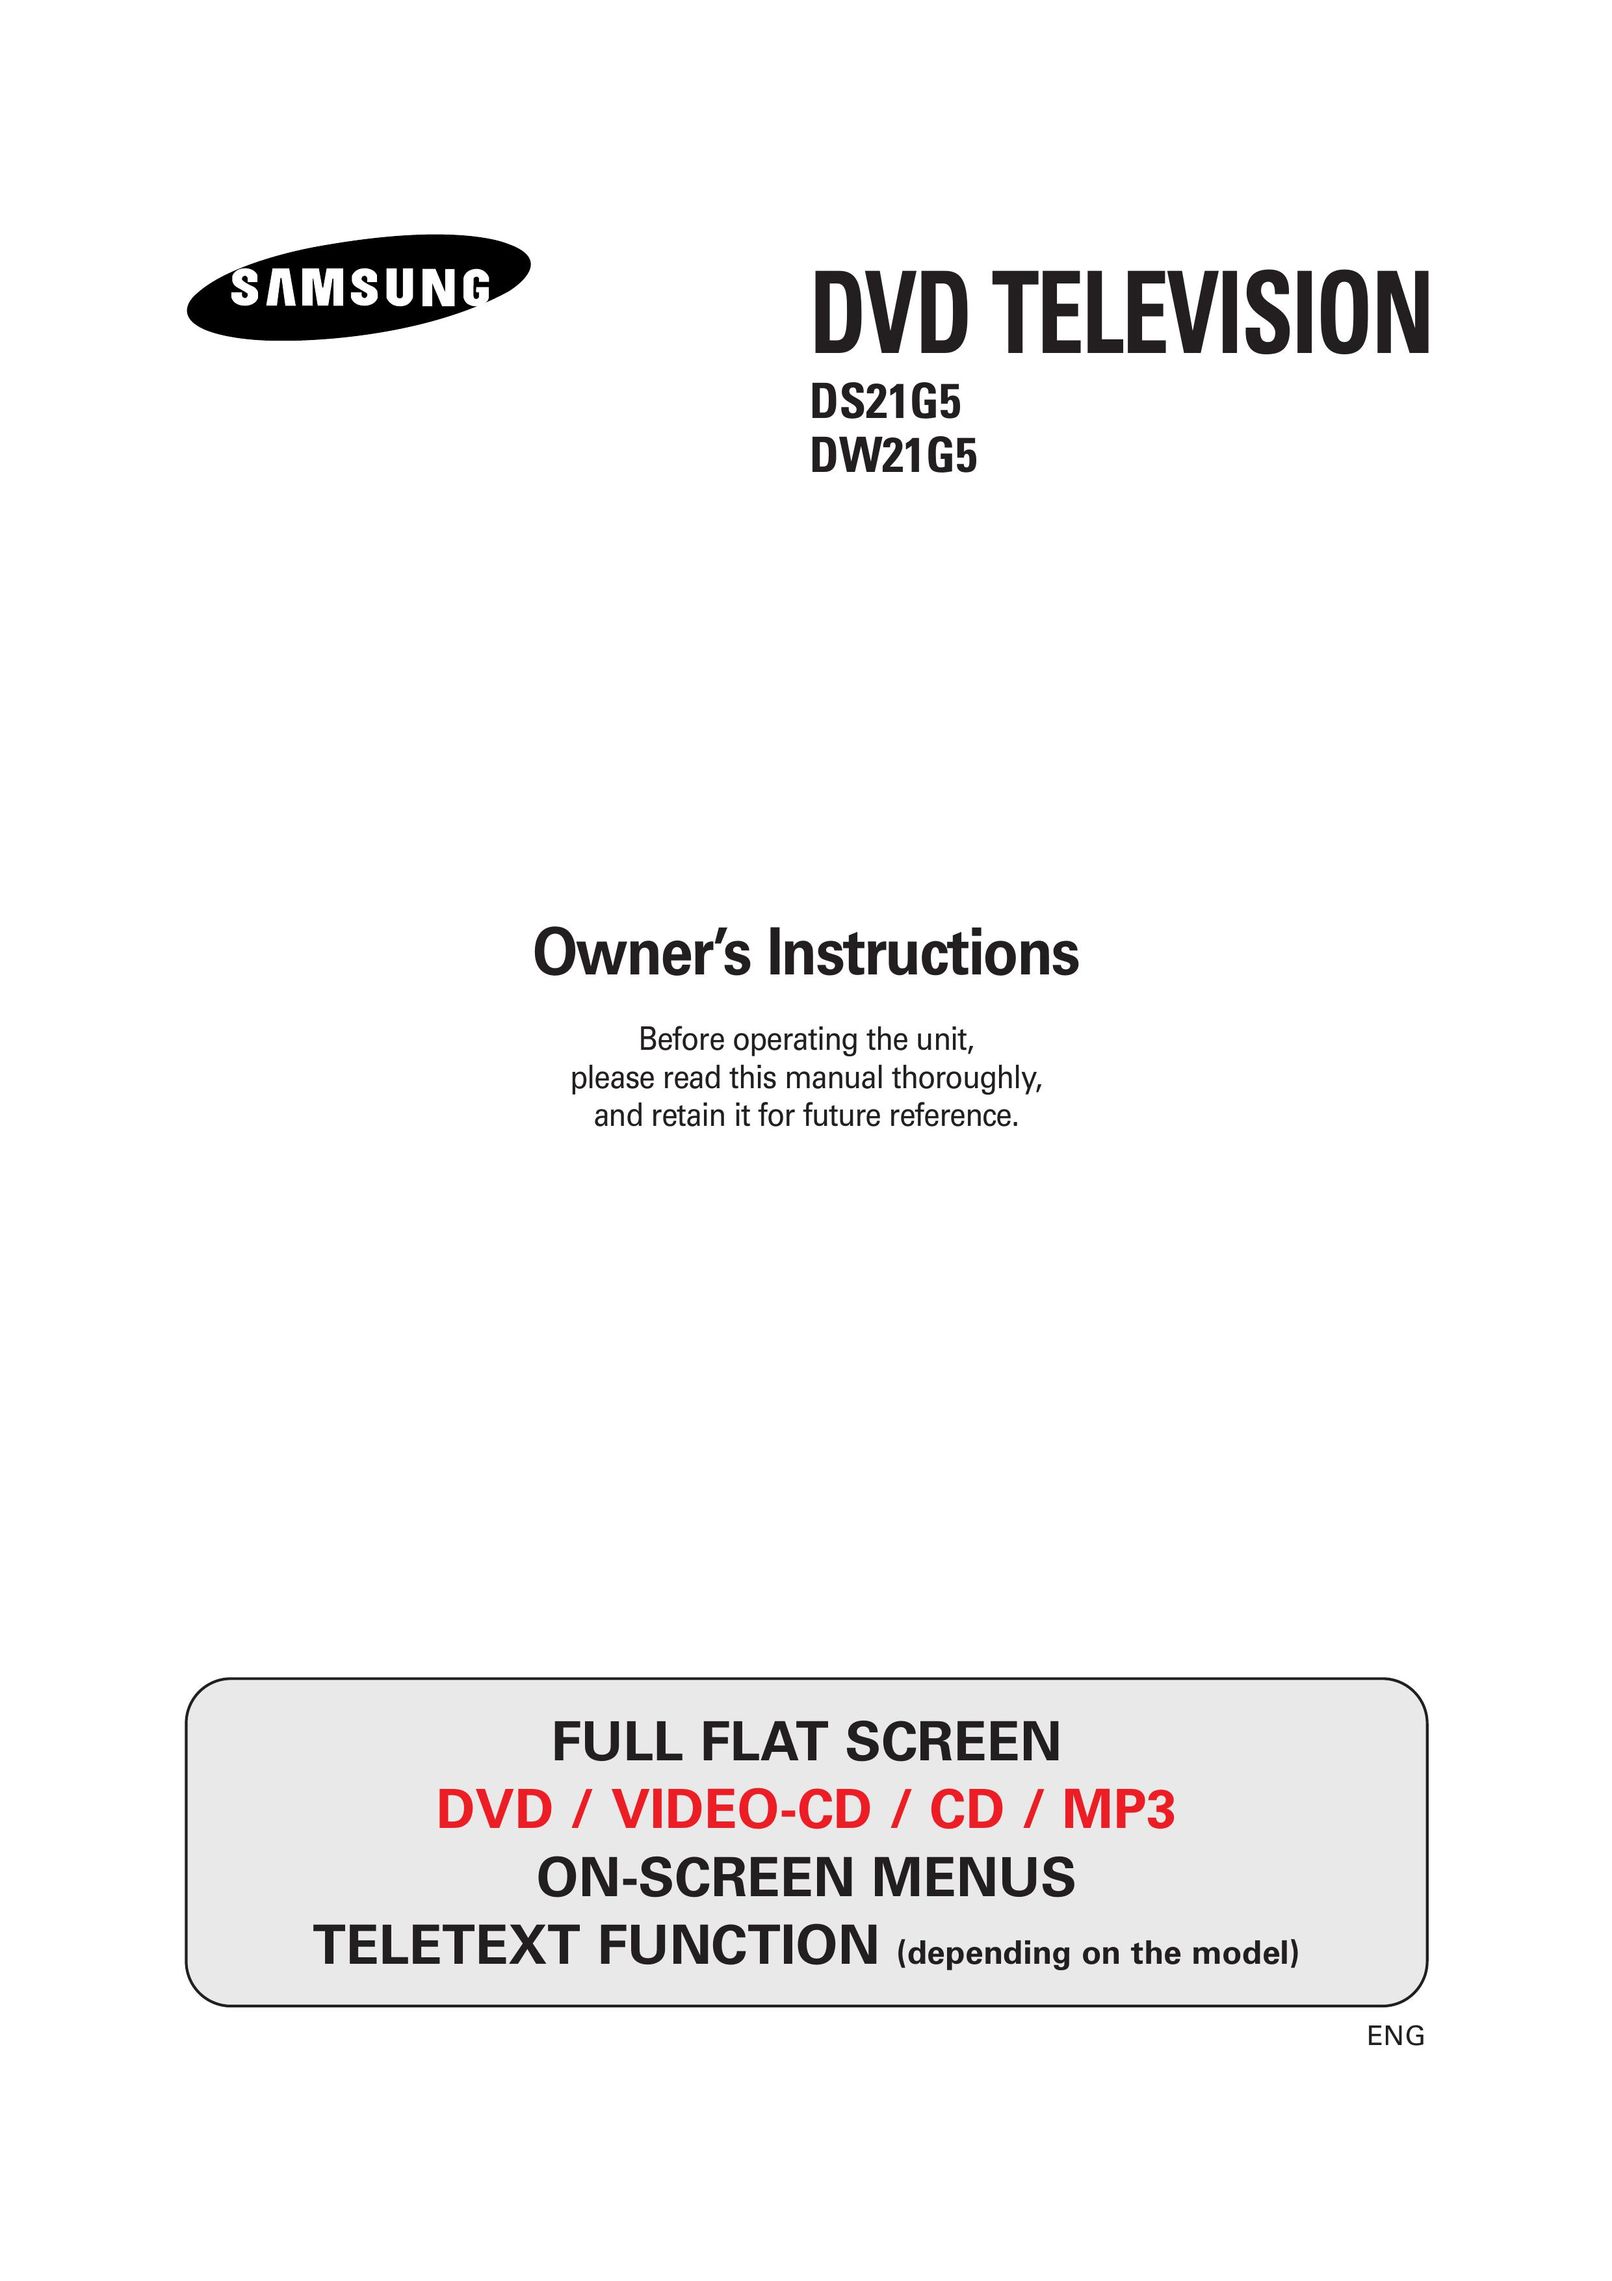 Samsung DS-21G5 TV DVD Combo User Manual